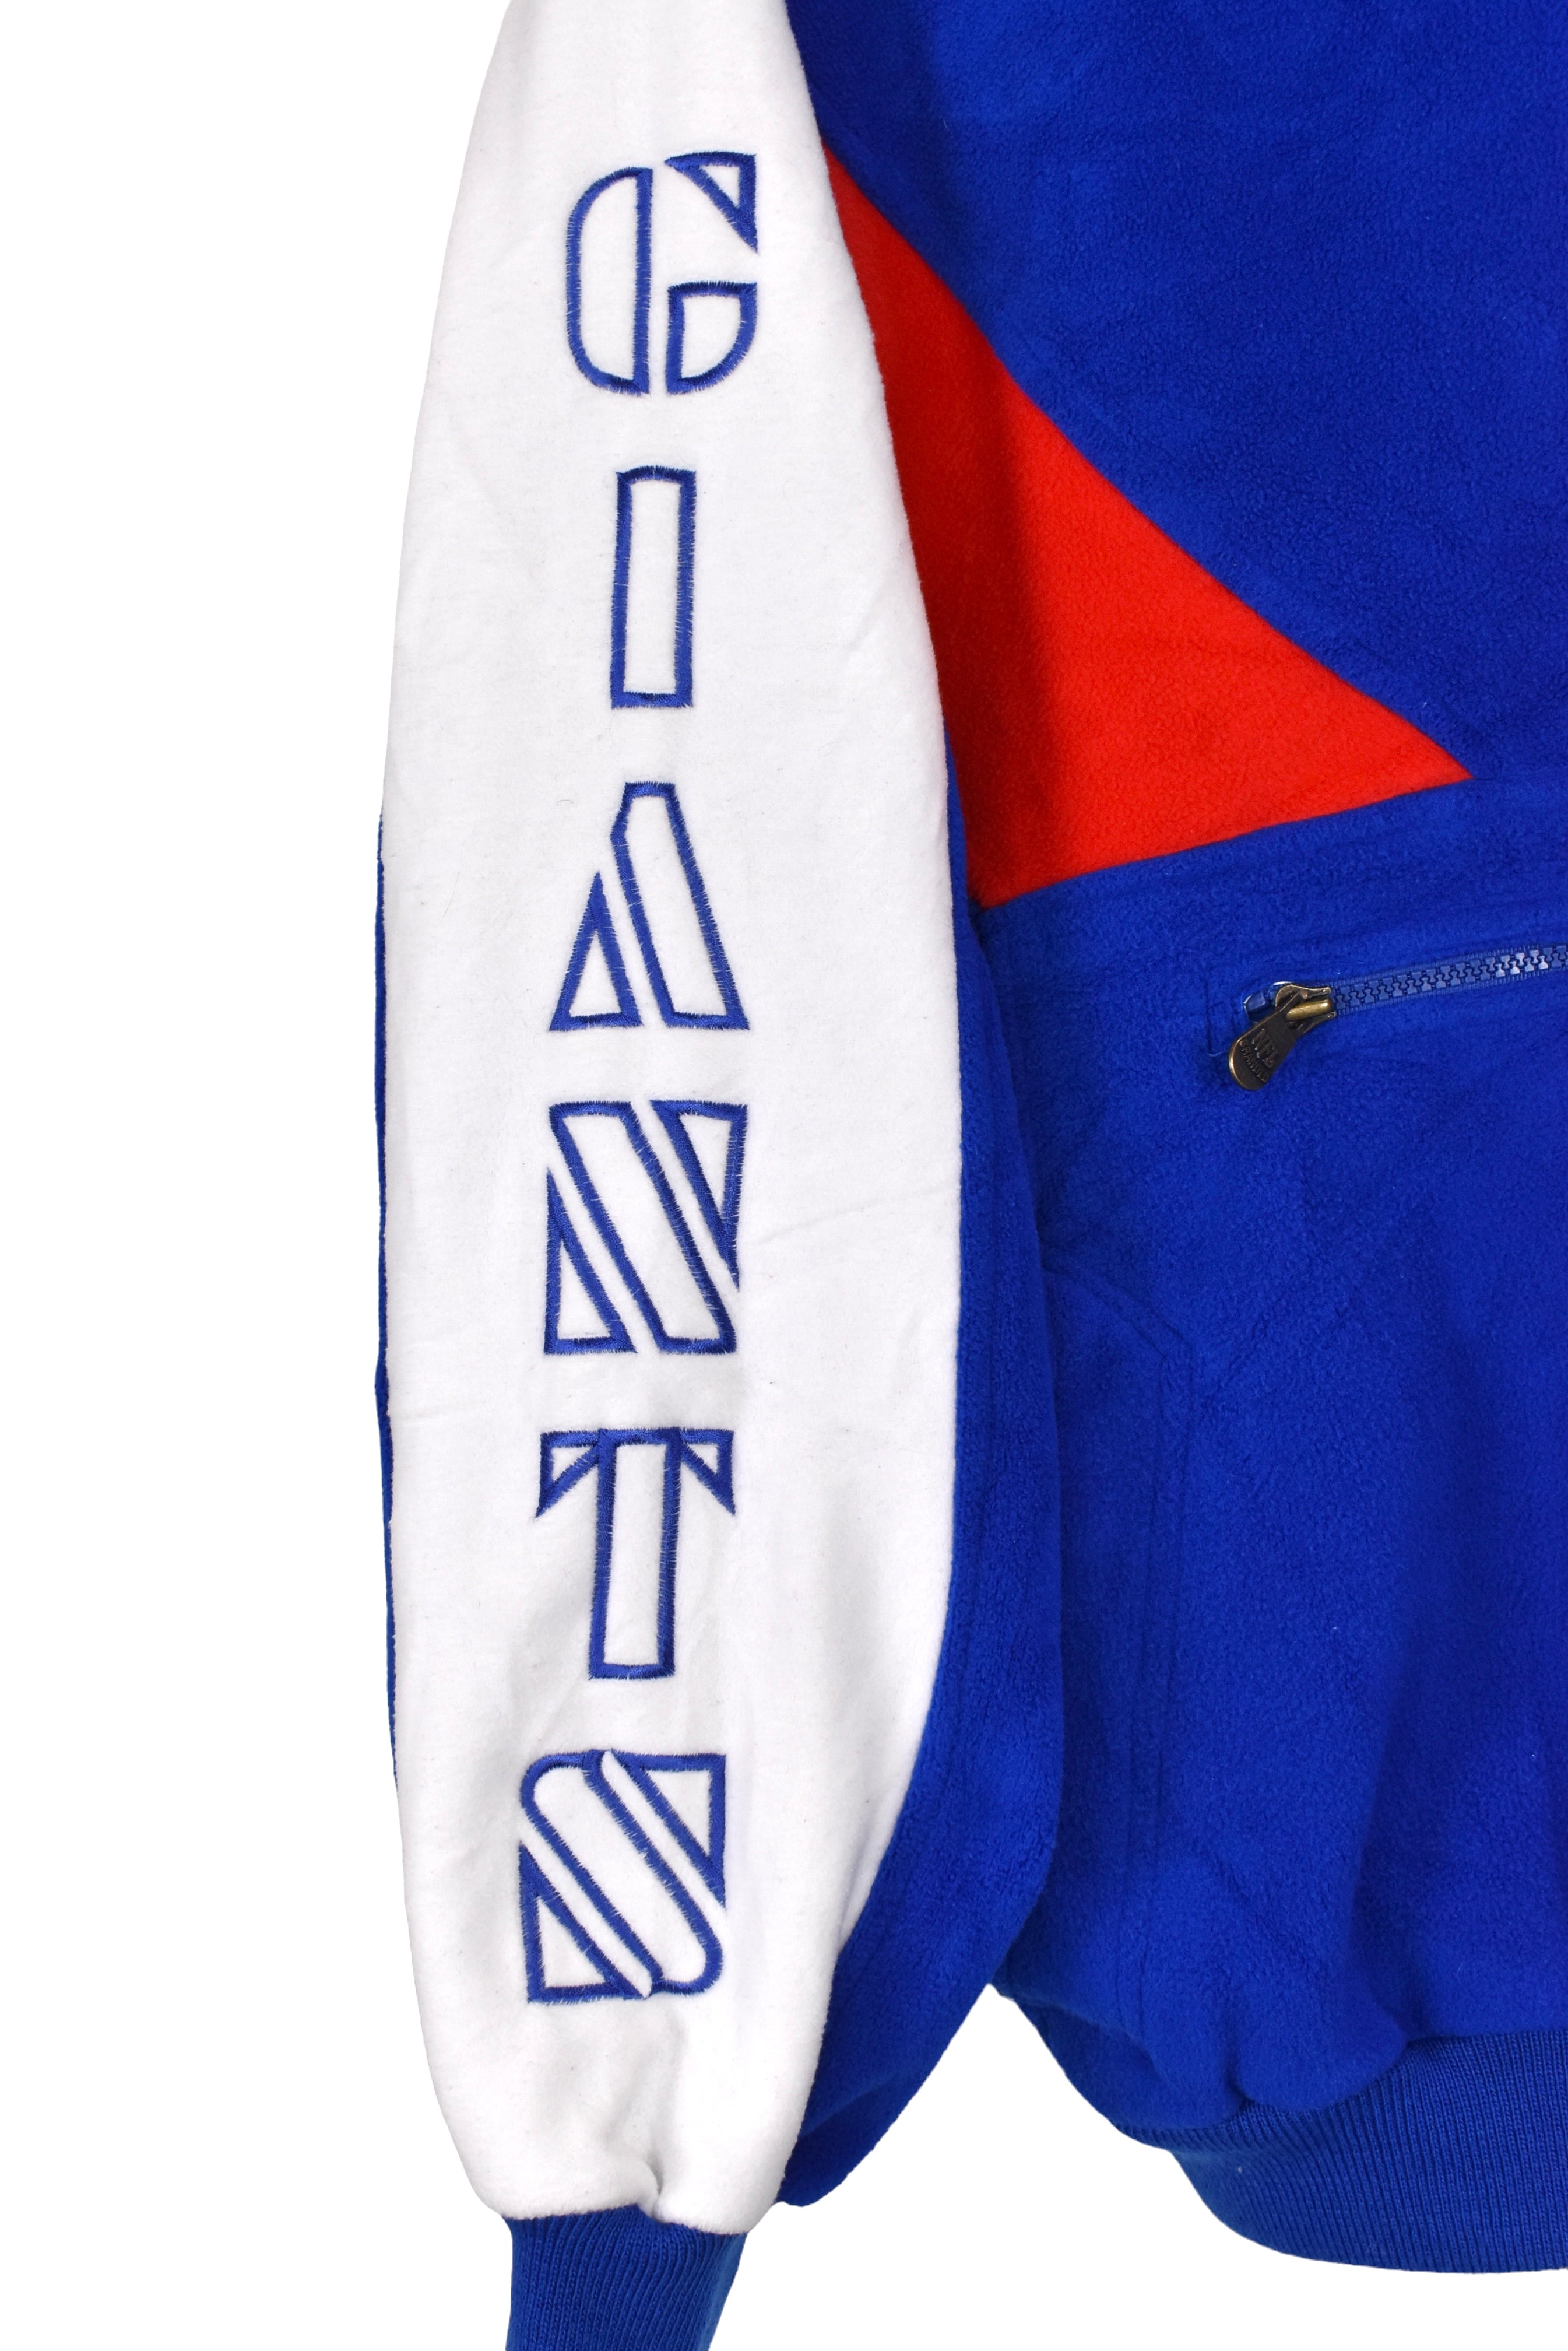 Vintage New York Giants fleece (M), blue NFL embroidered sweatshirt